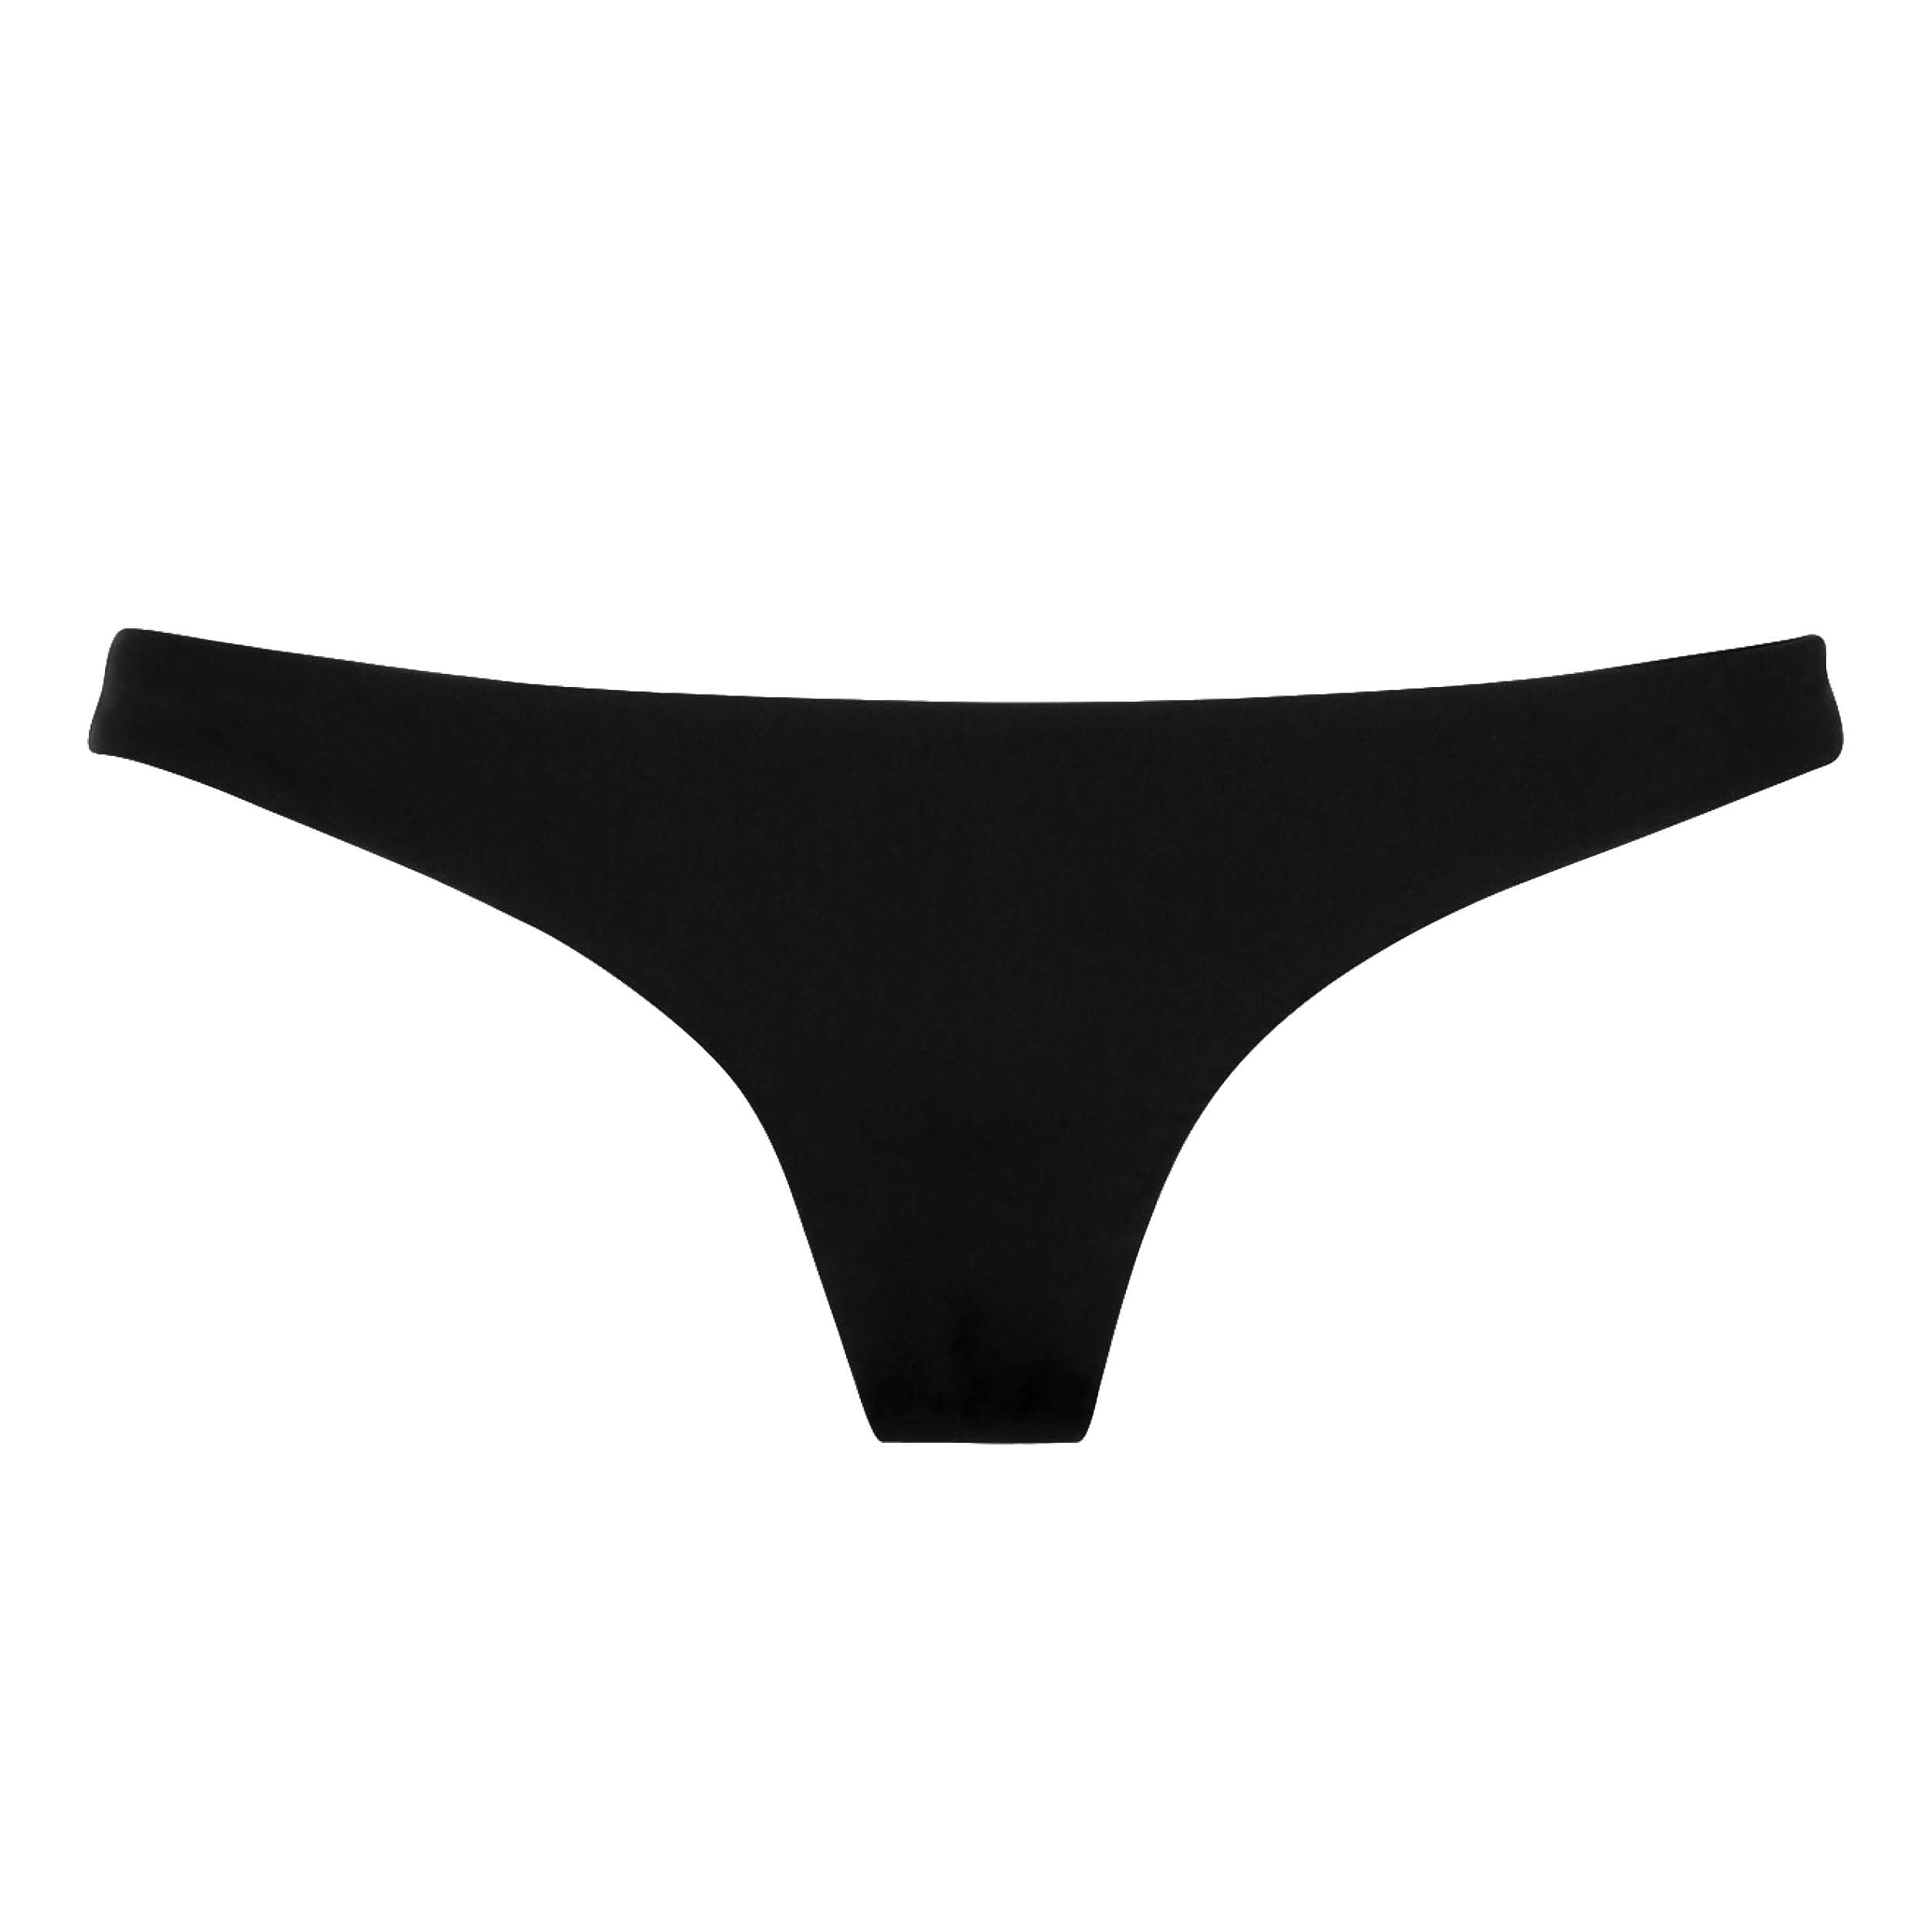 Lost: The Mid-Rise Thong Bikini Bottom